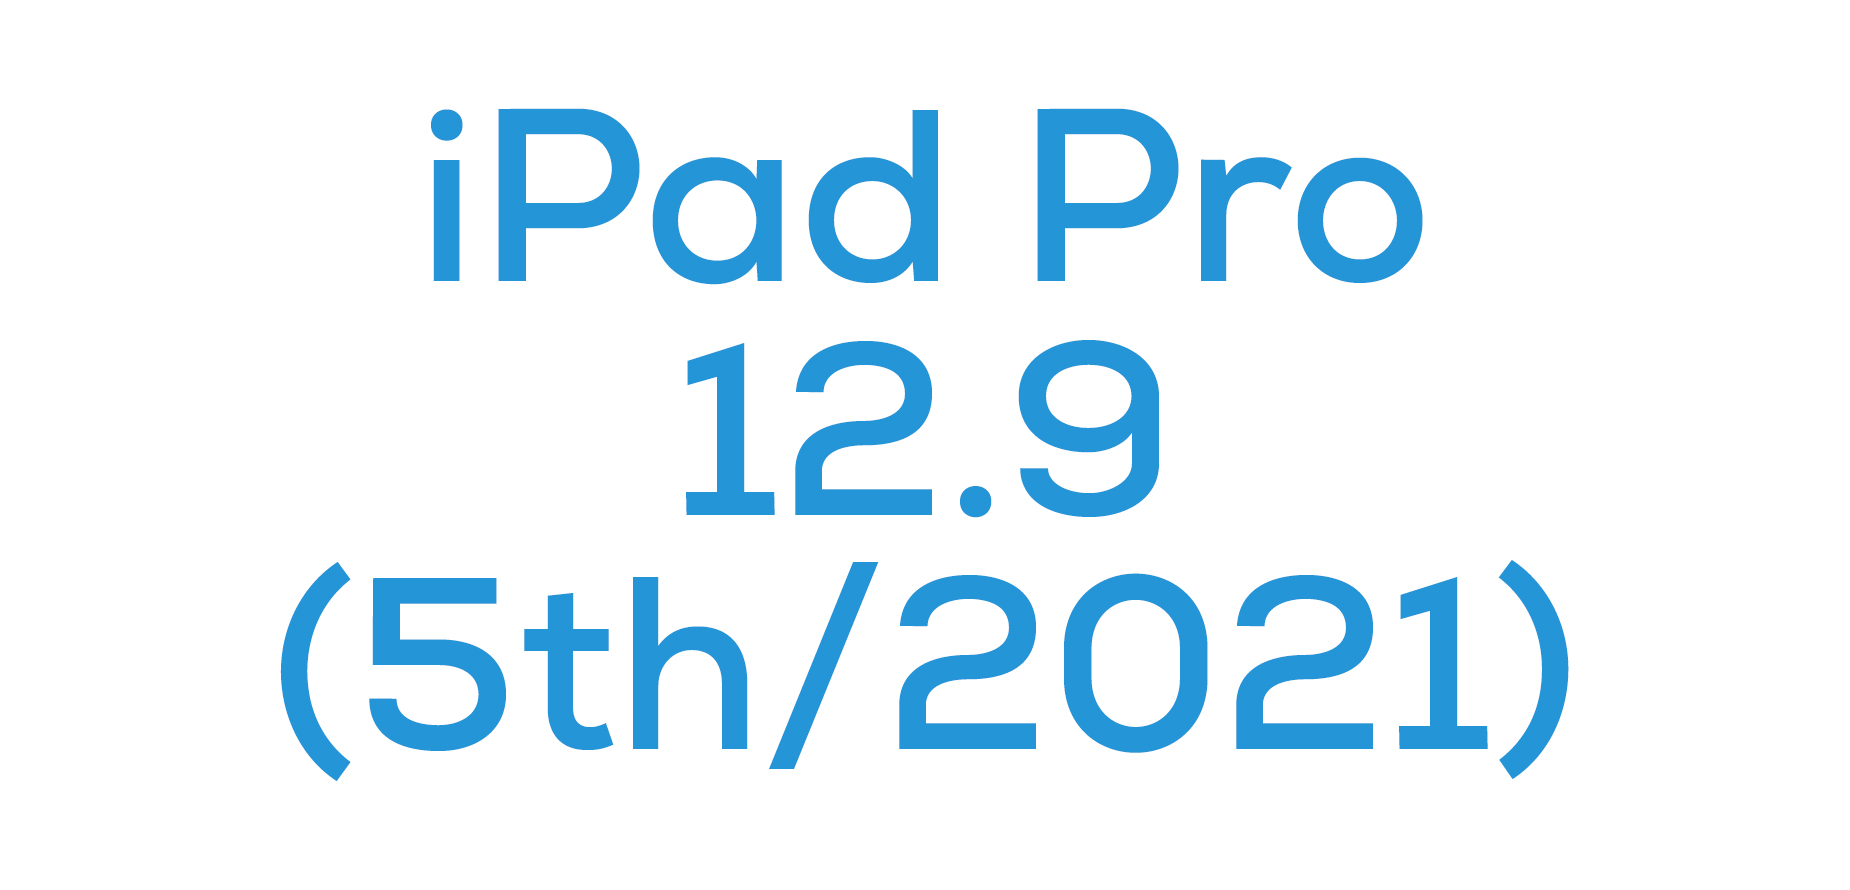 iPad Pro 12.9 (5th/2021)